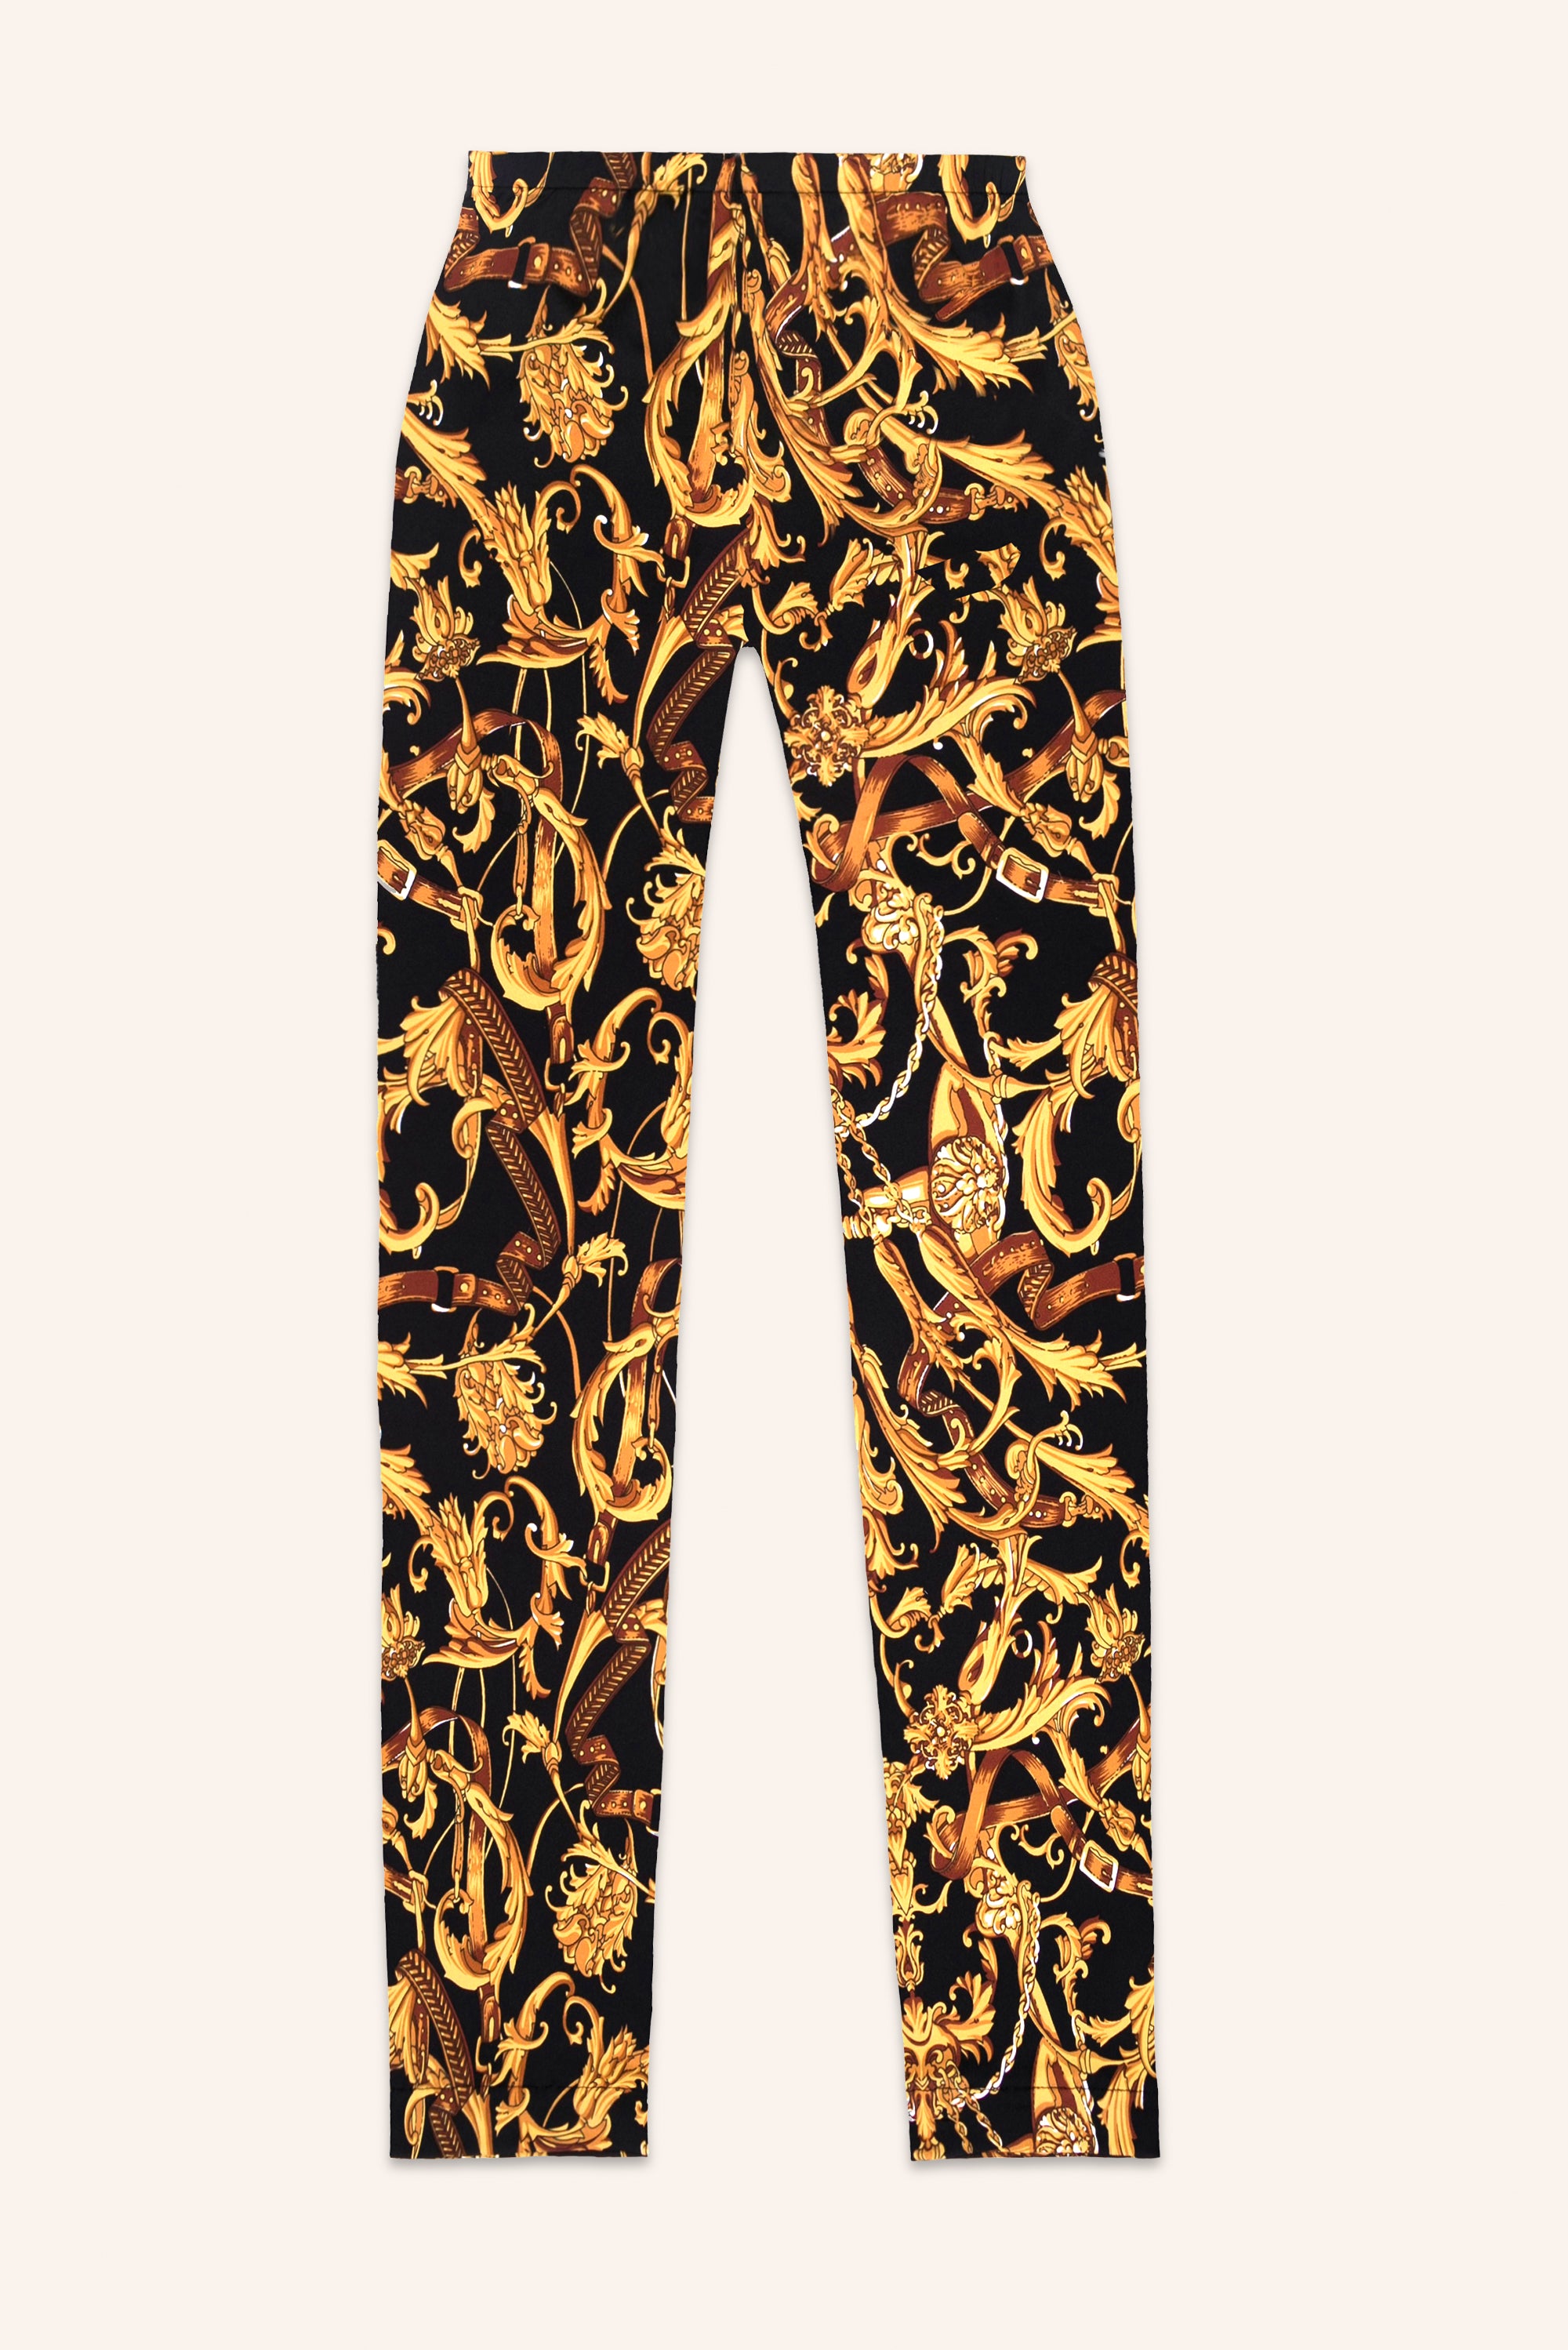 Hermes Men's Velvet Pants Size 36/32 Excellent Condition!!! | eBay